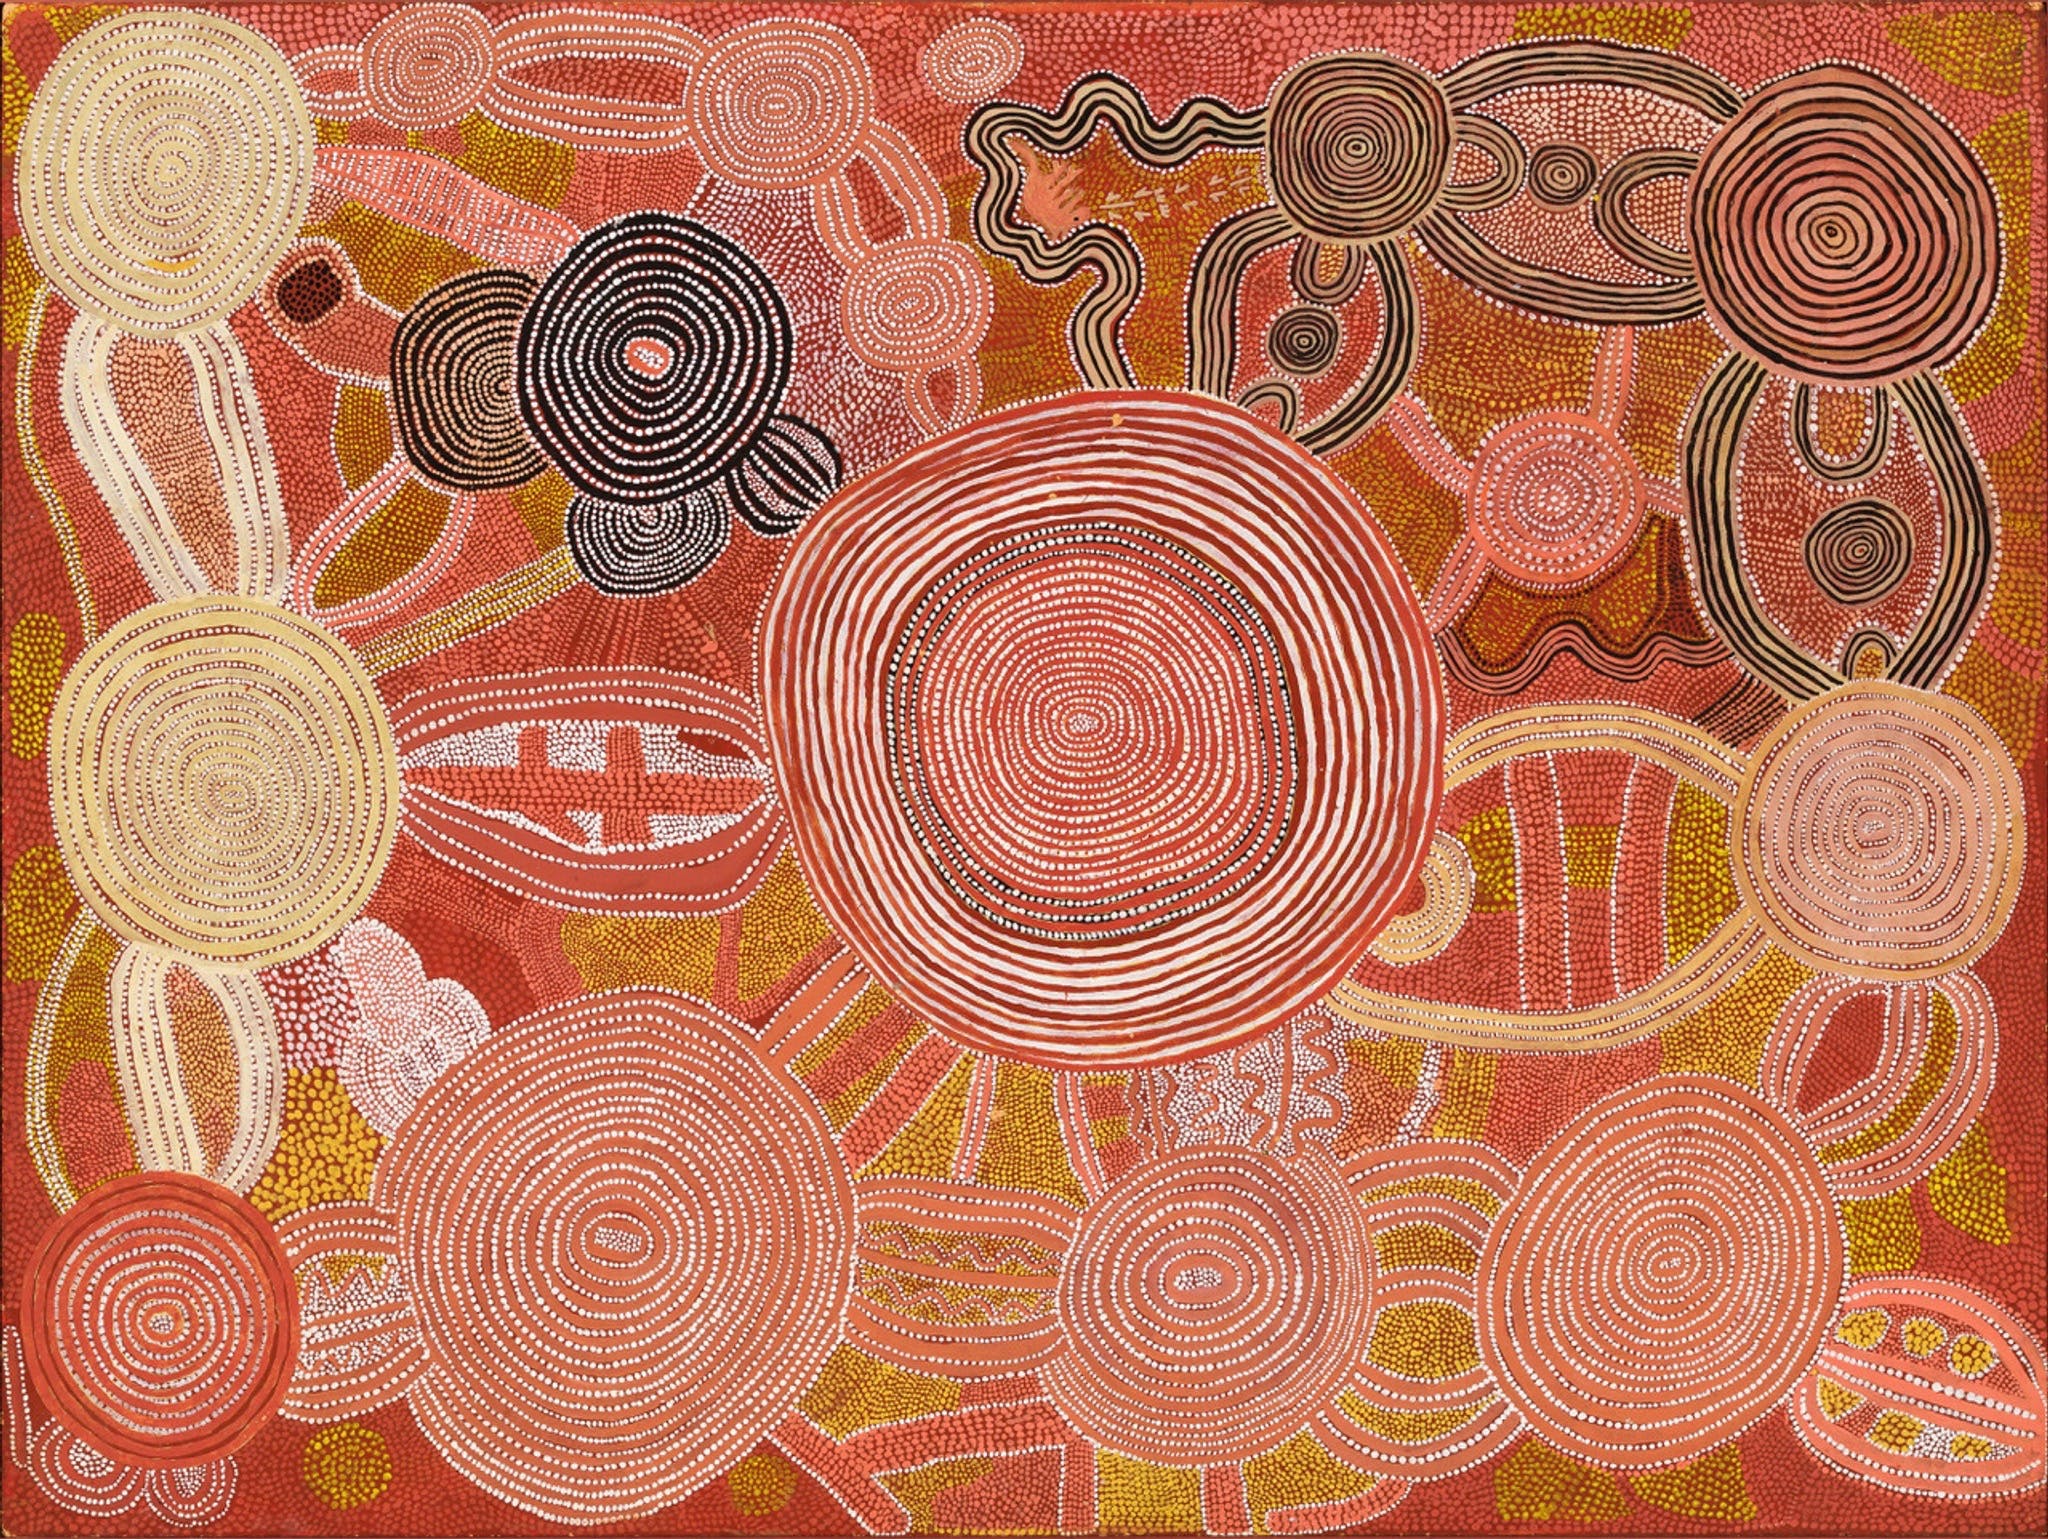 Reverence Exhibition of Australian Indigenous Art - C Tourism